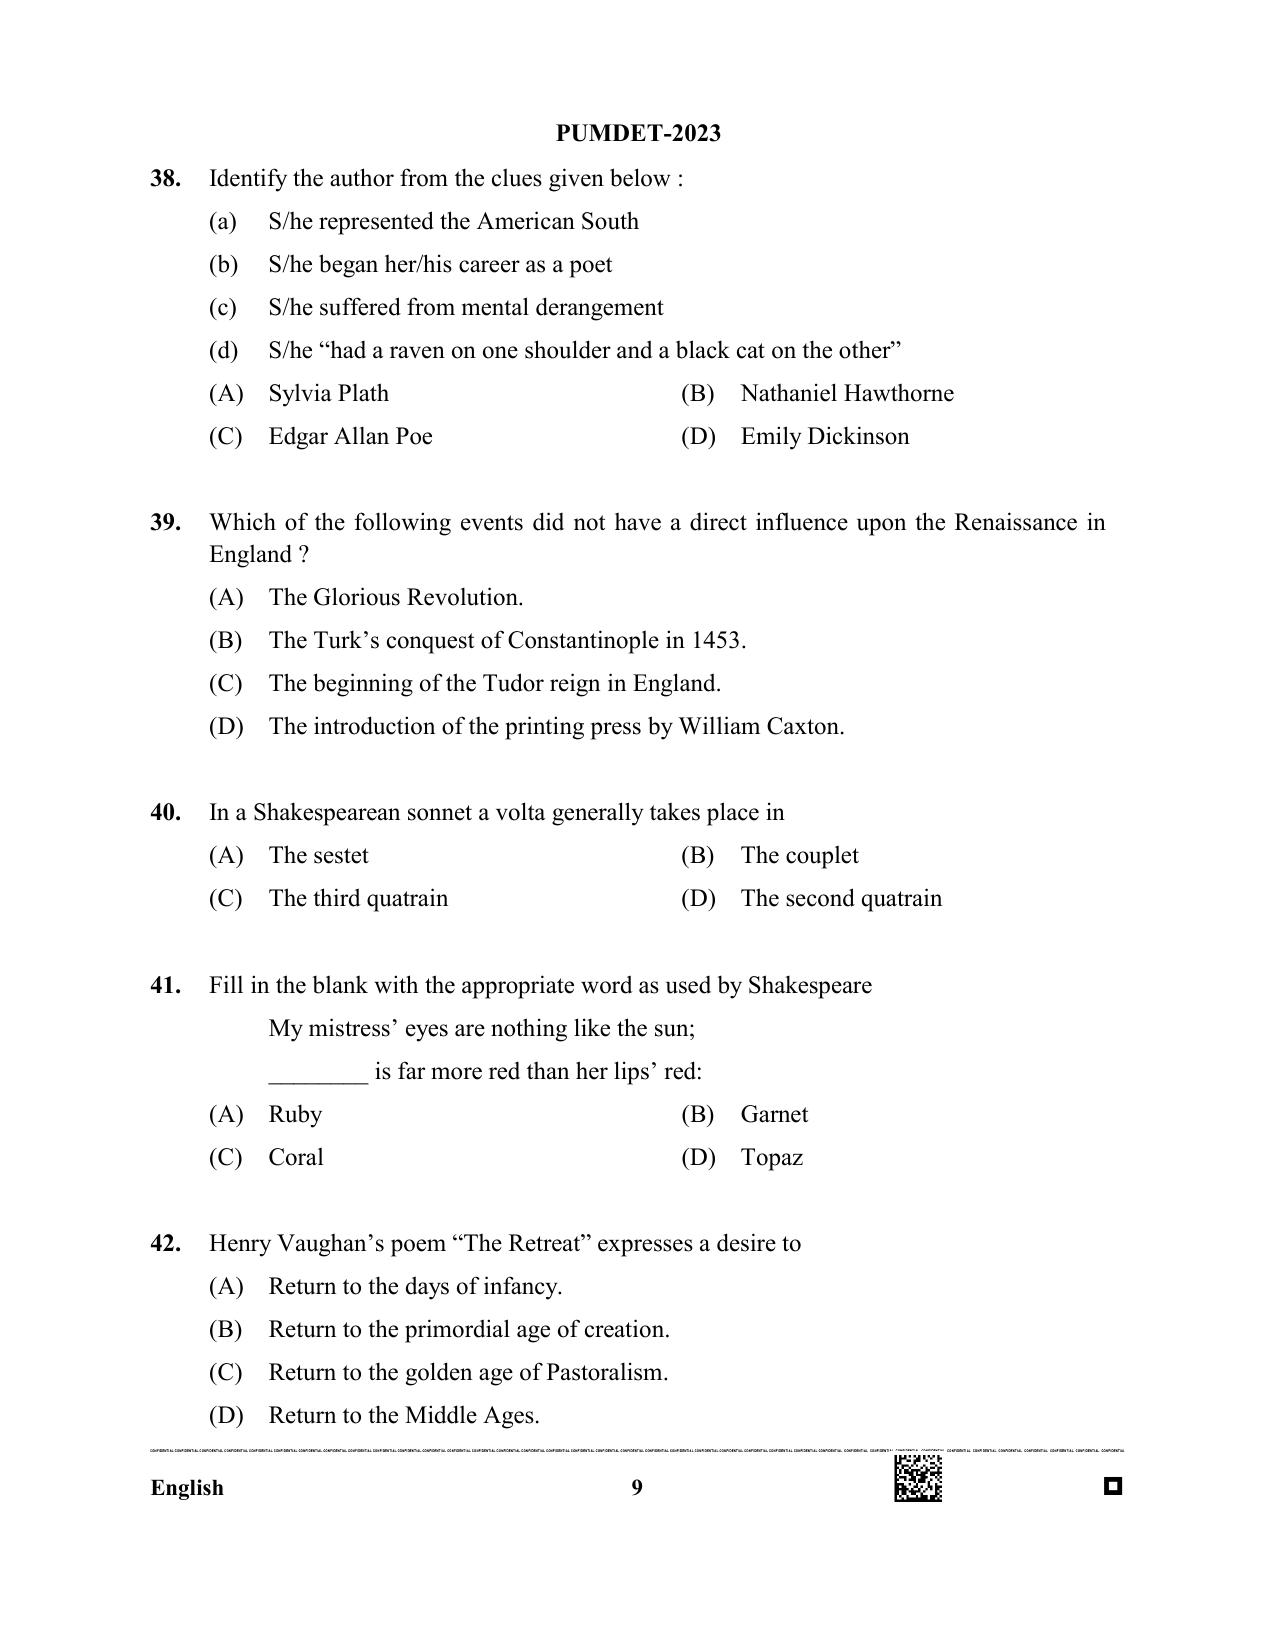 PUBDET 2023 English Question Paper - Page 9